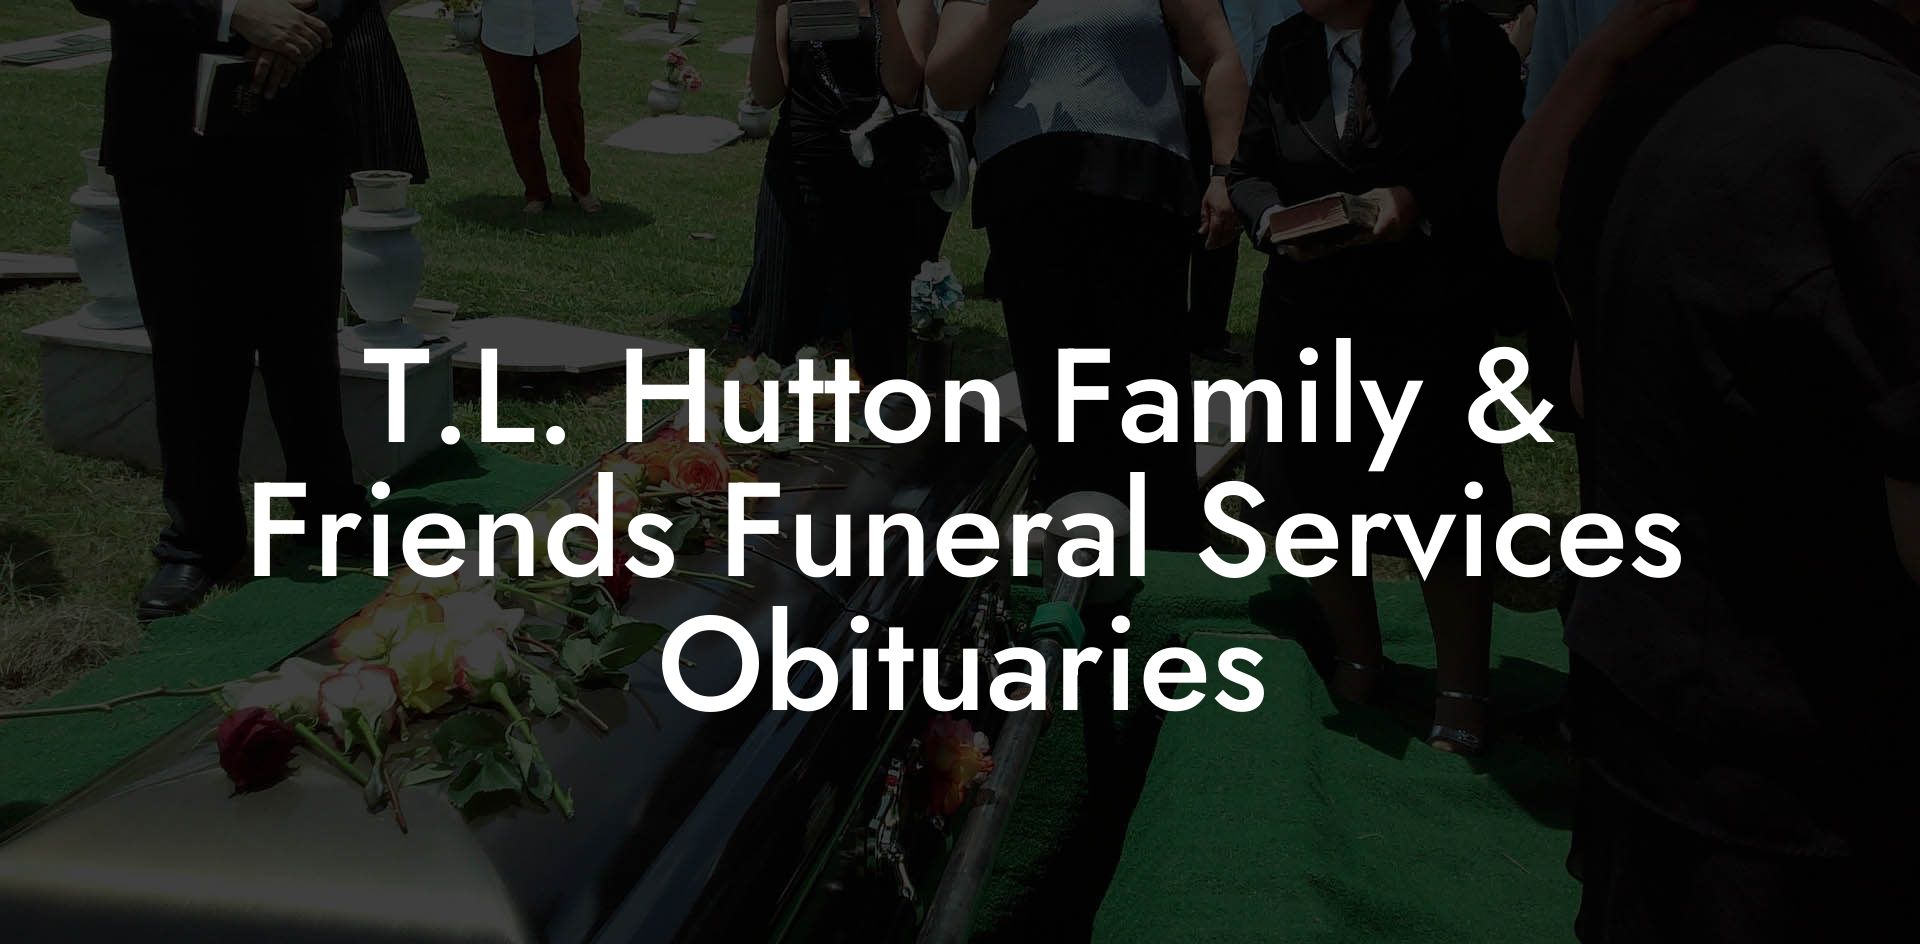 T.L. Hutton Family & Friends Funeral Services Obituaries